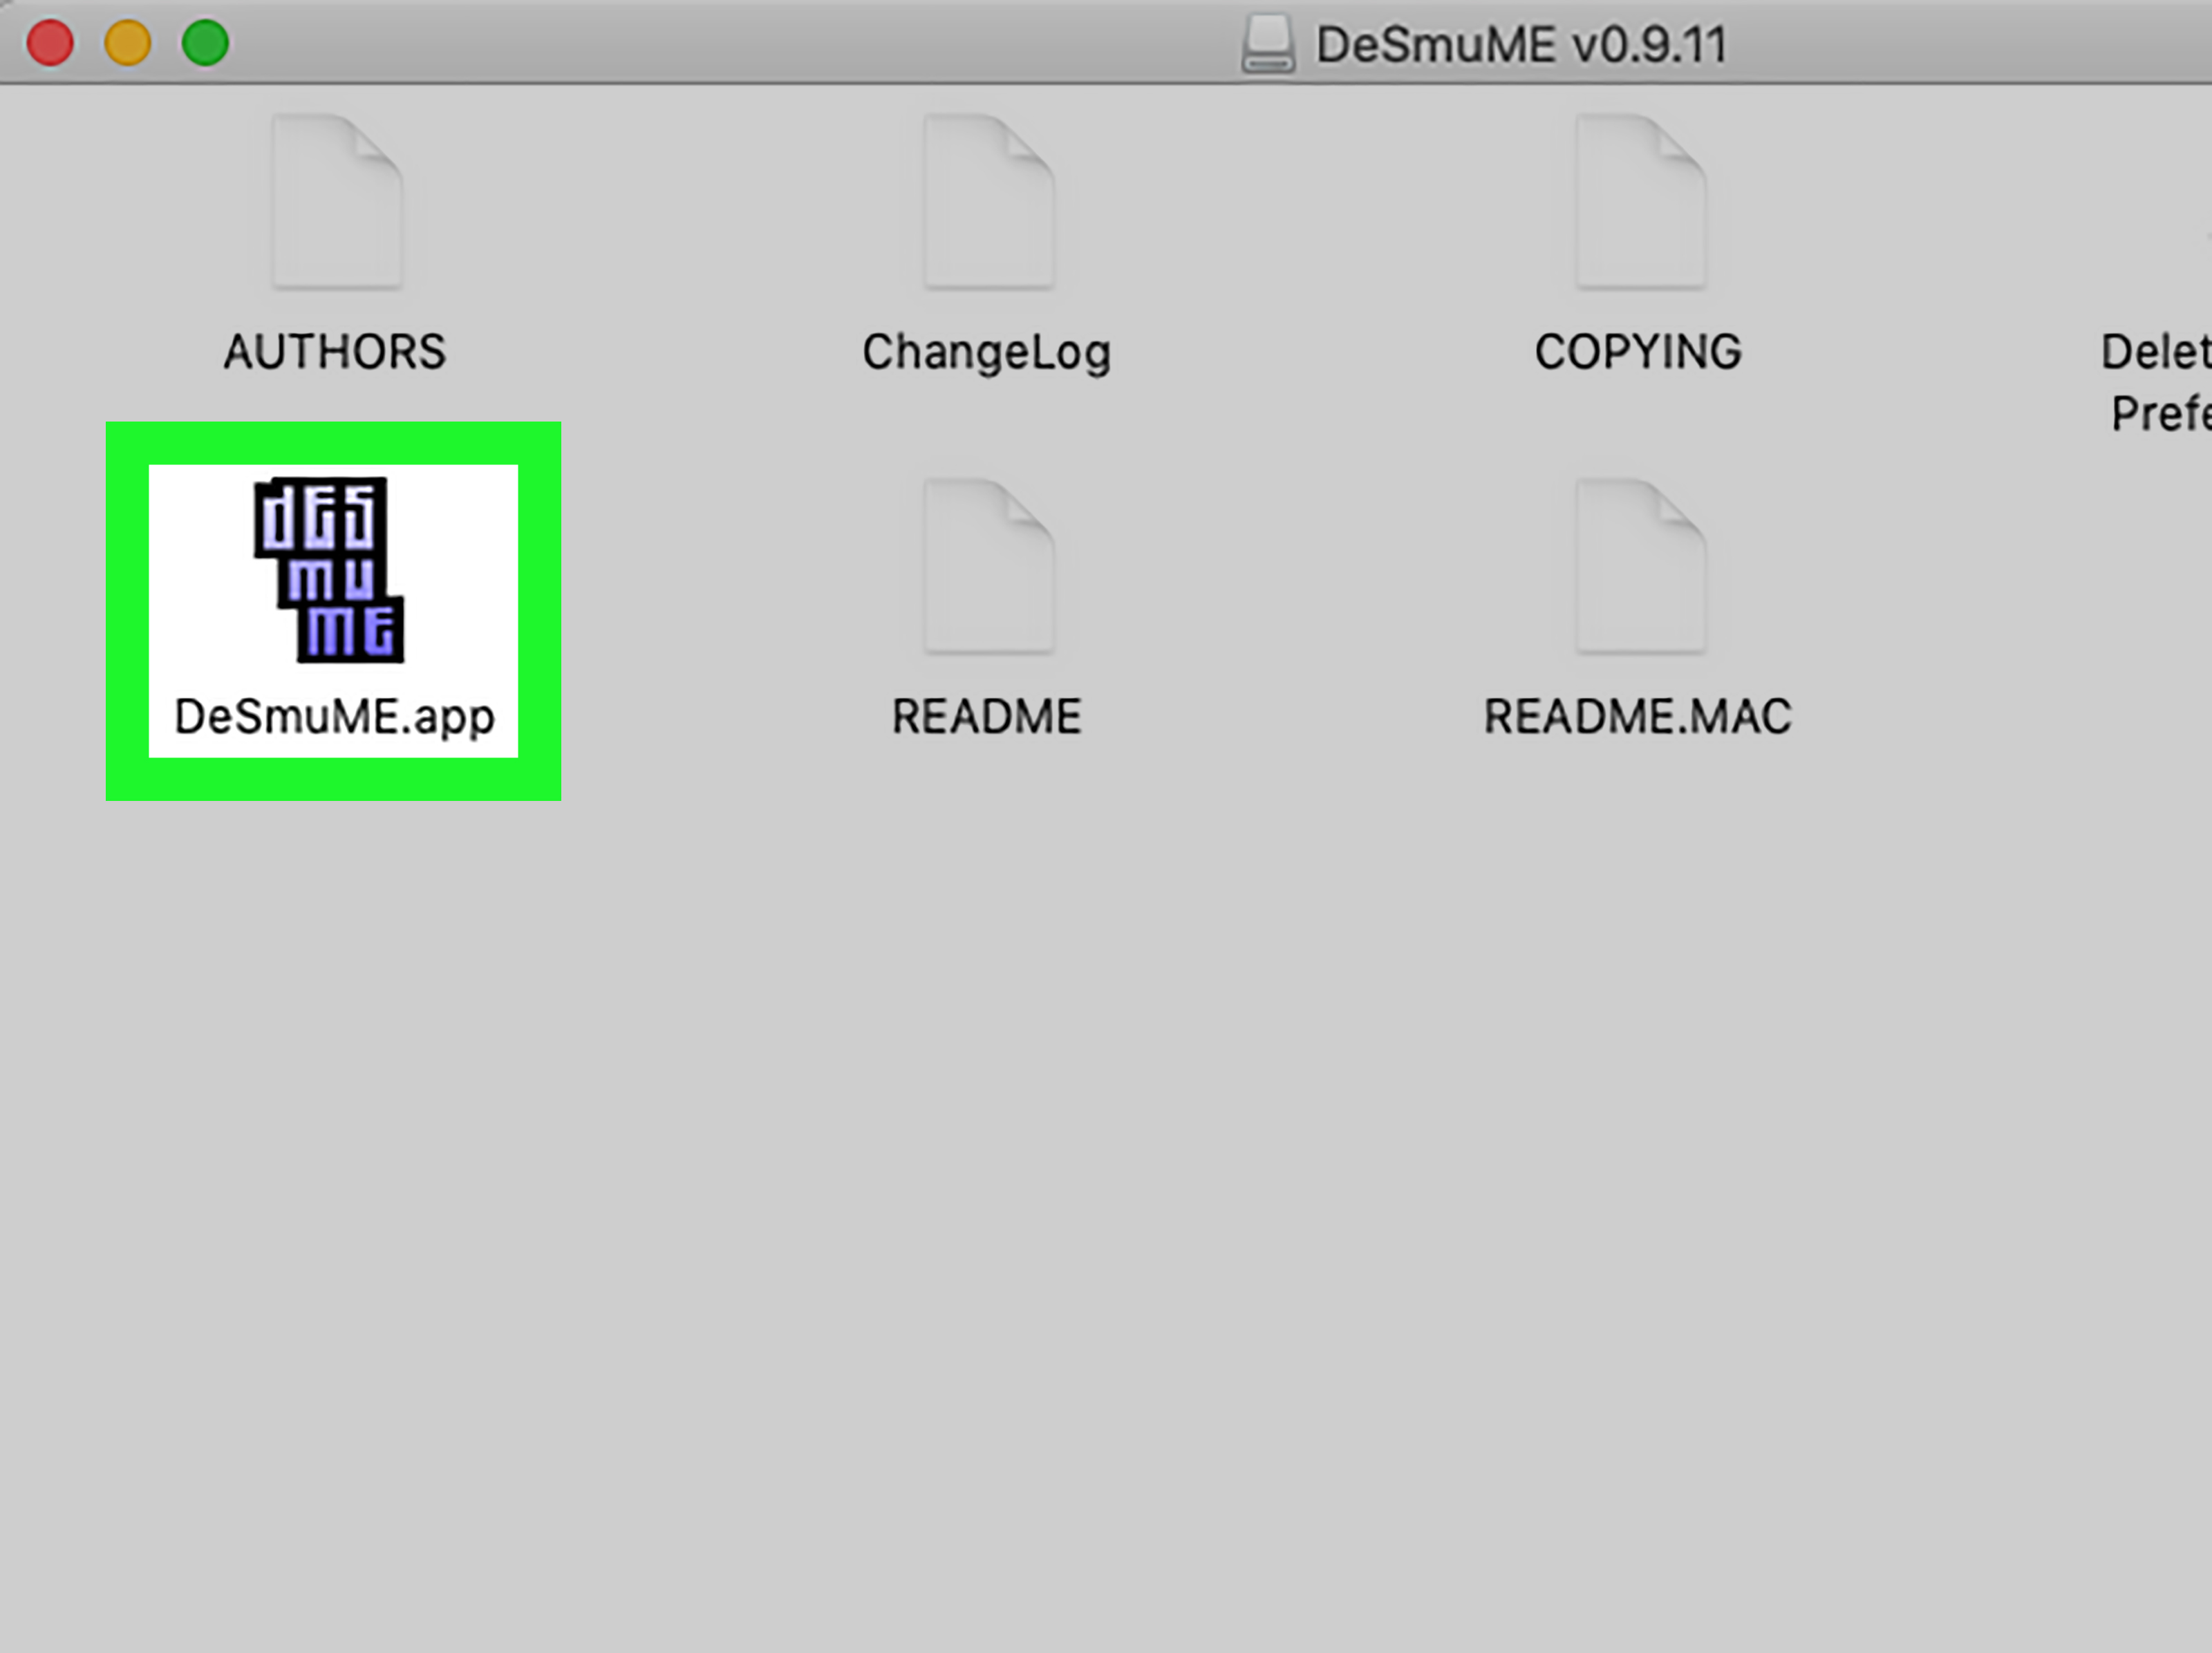 ds emulator for mac 10.12